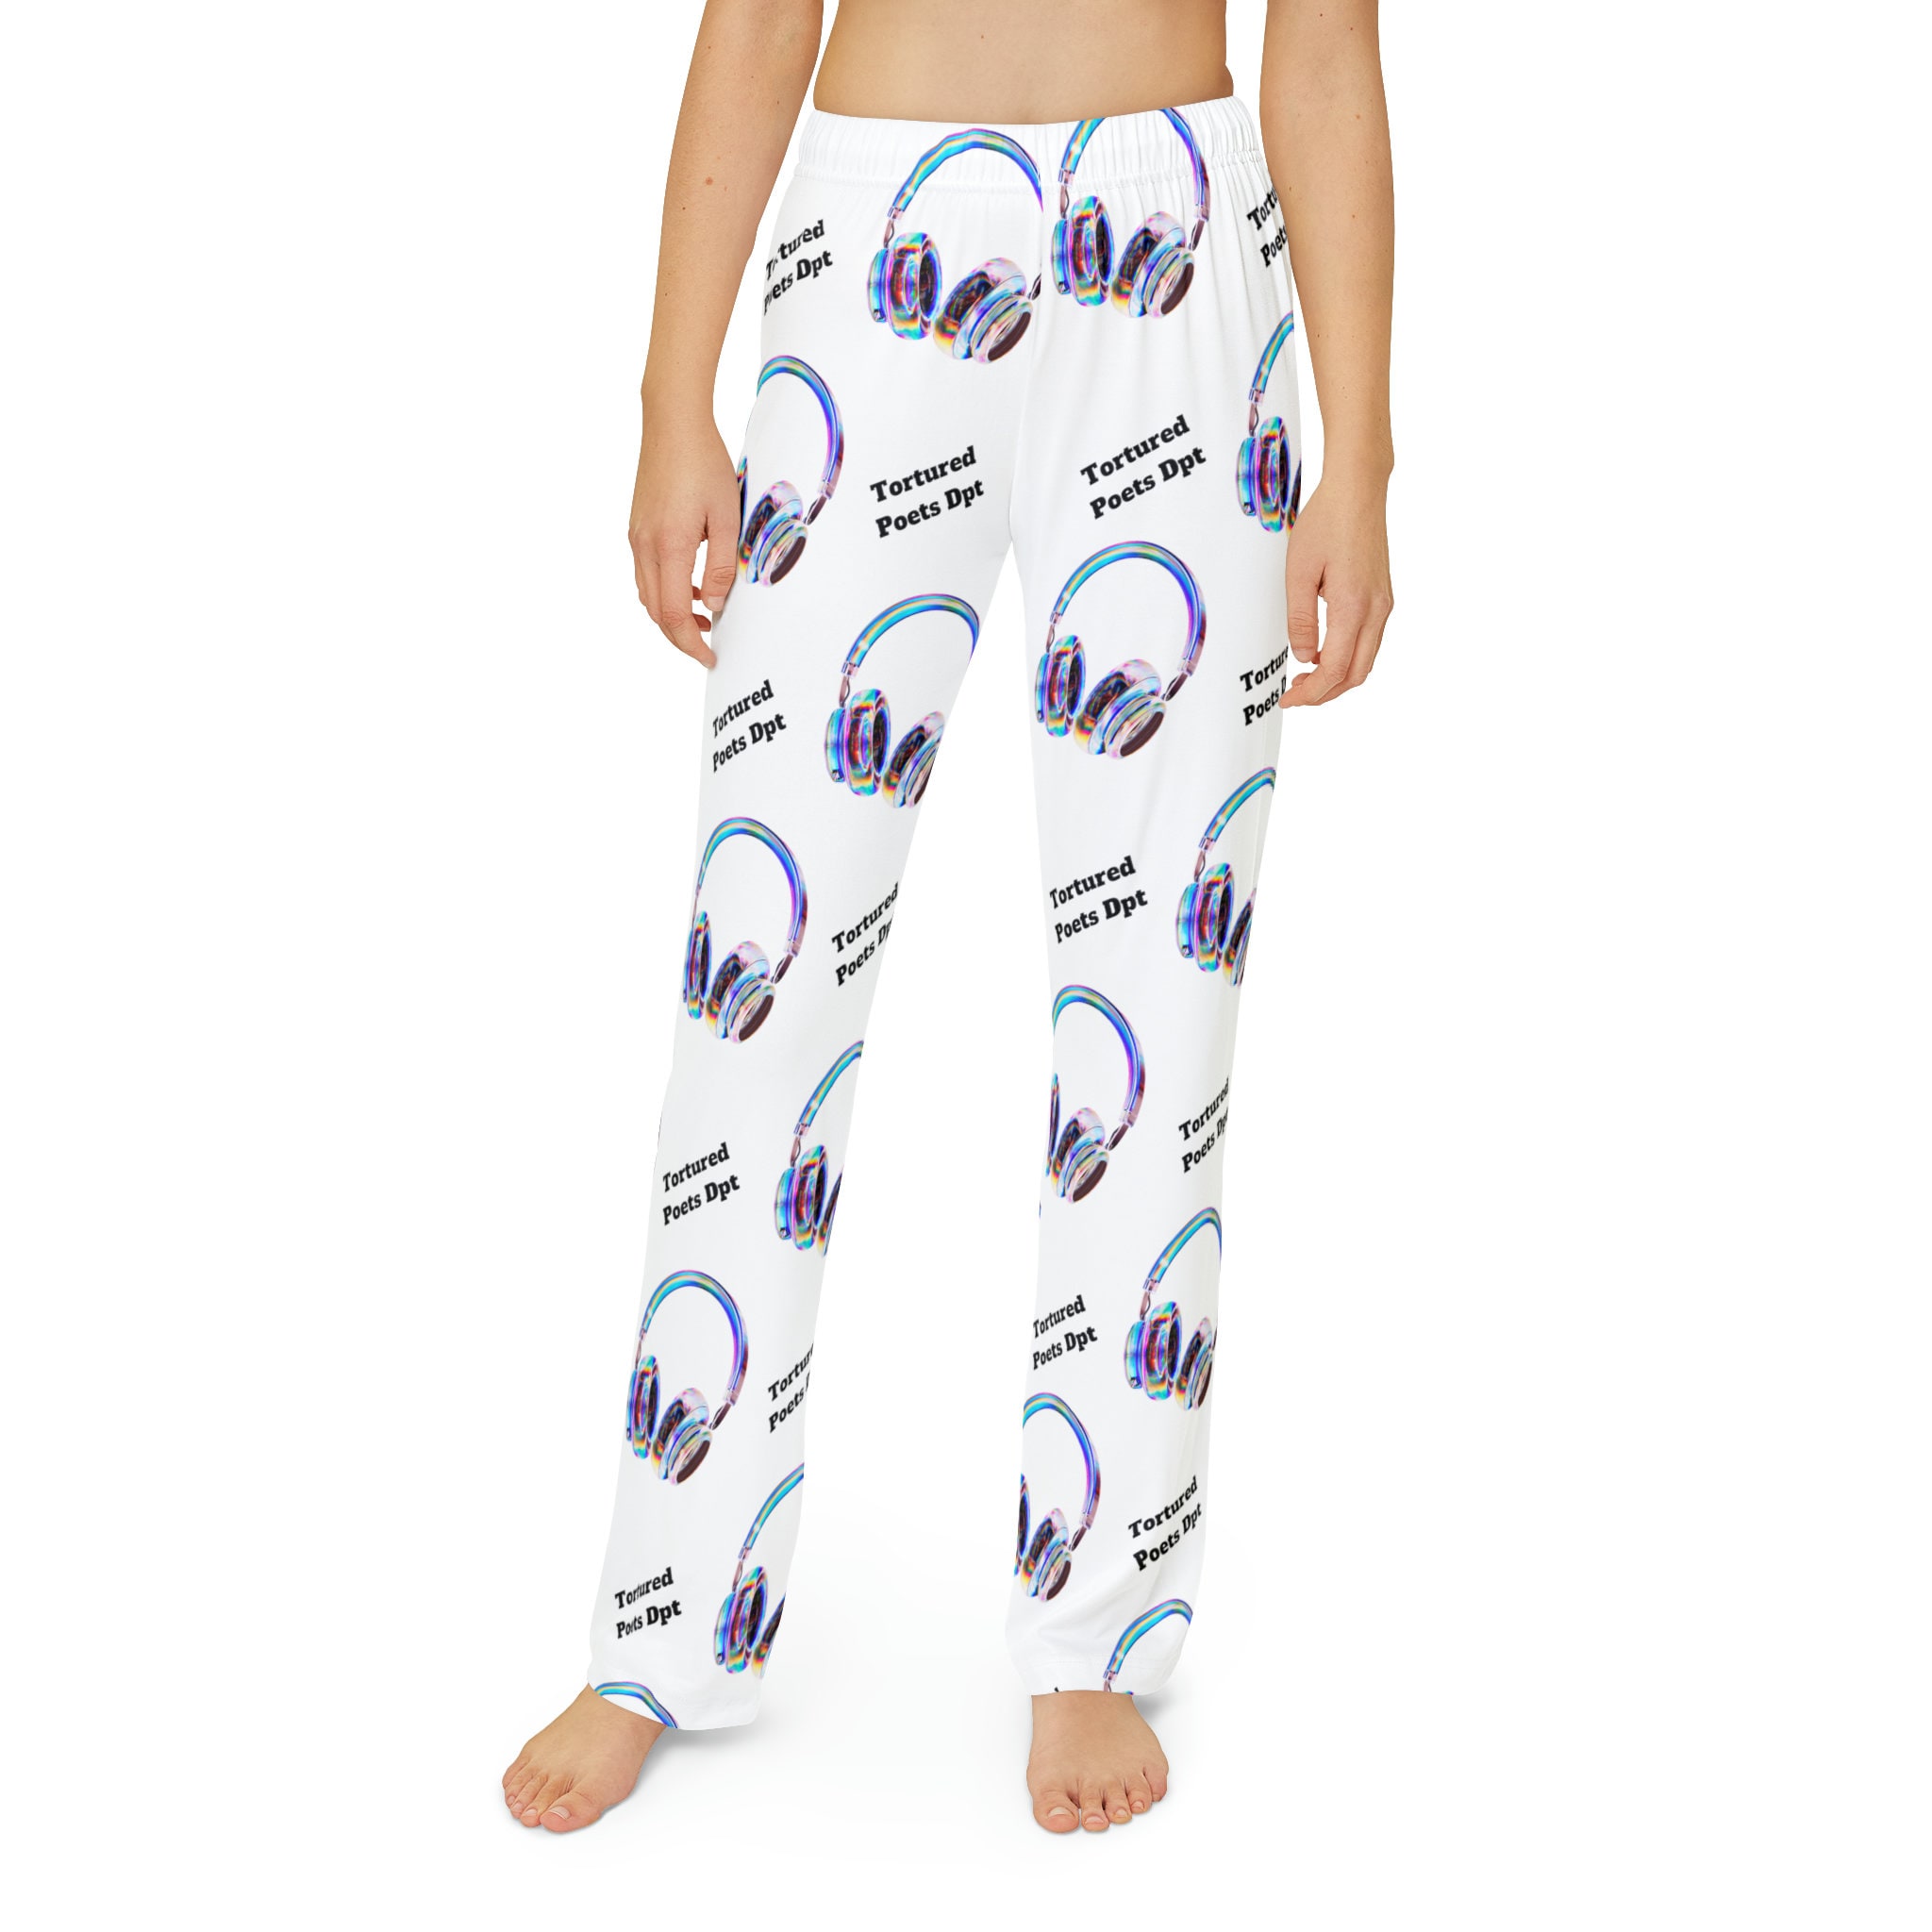 Taylor Pajamas, taylor version Pajama Pants, Taylor Merch, Gift For Mother's day